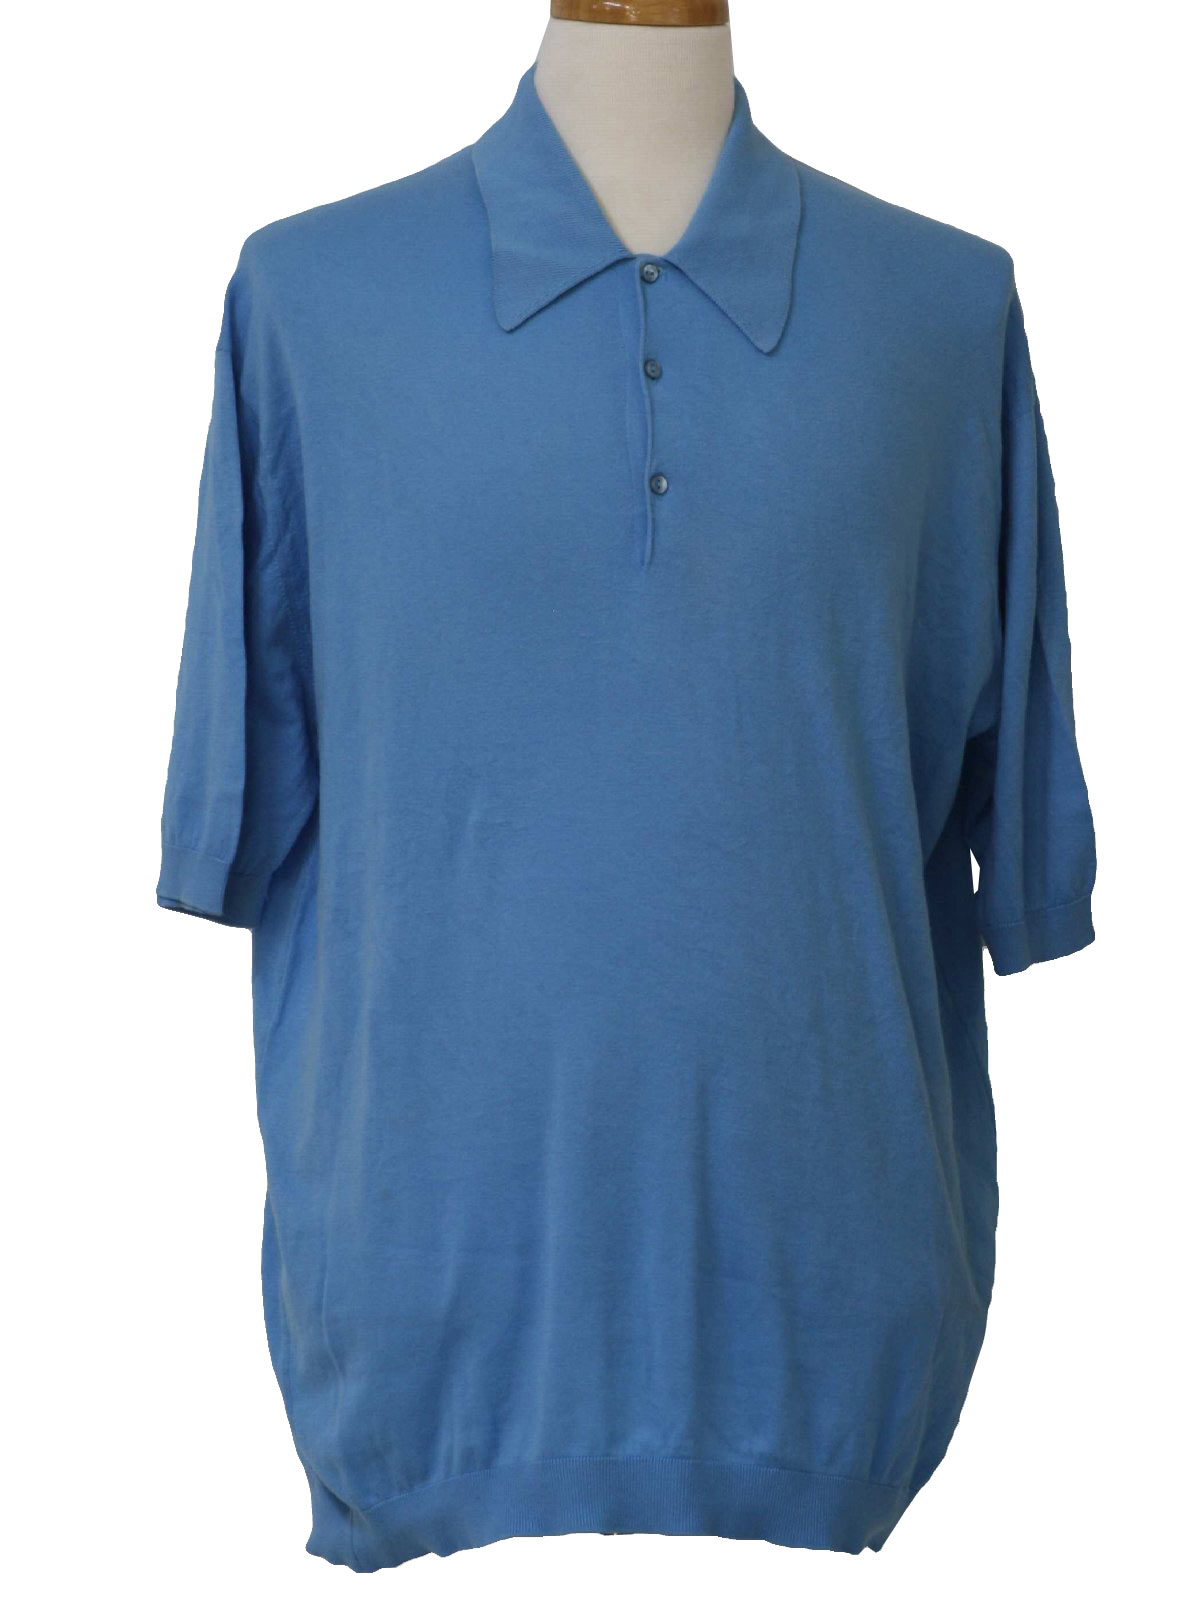 Vintage 80s Knit Shirt: 80s -made in England- Mens sky blue light ...